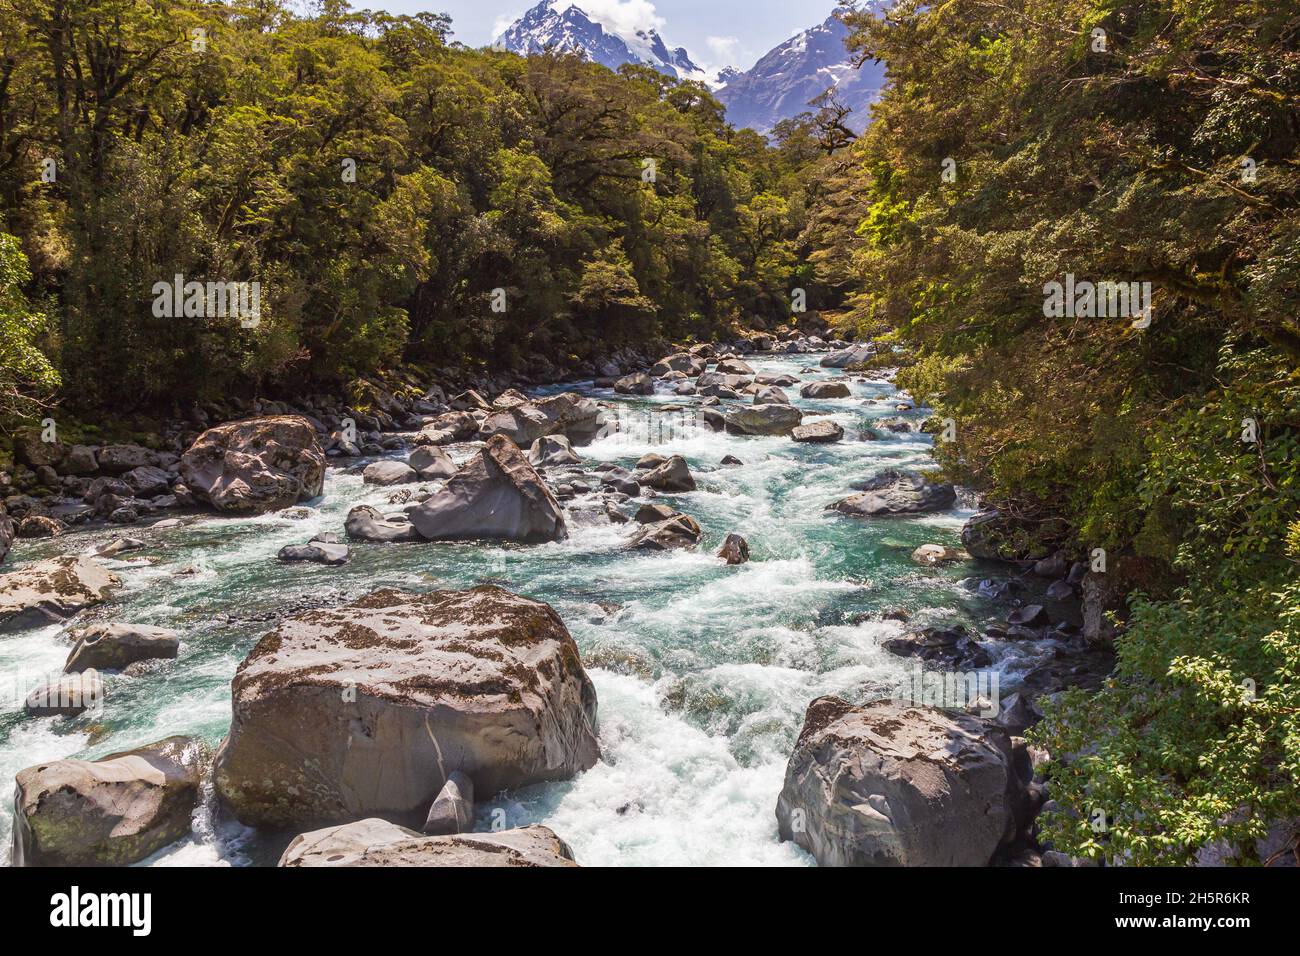 Fiordland National Park. Stormy river among green trees. South Island, New Zealand Stock Photo